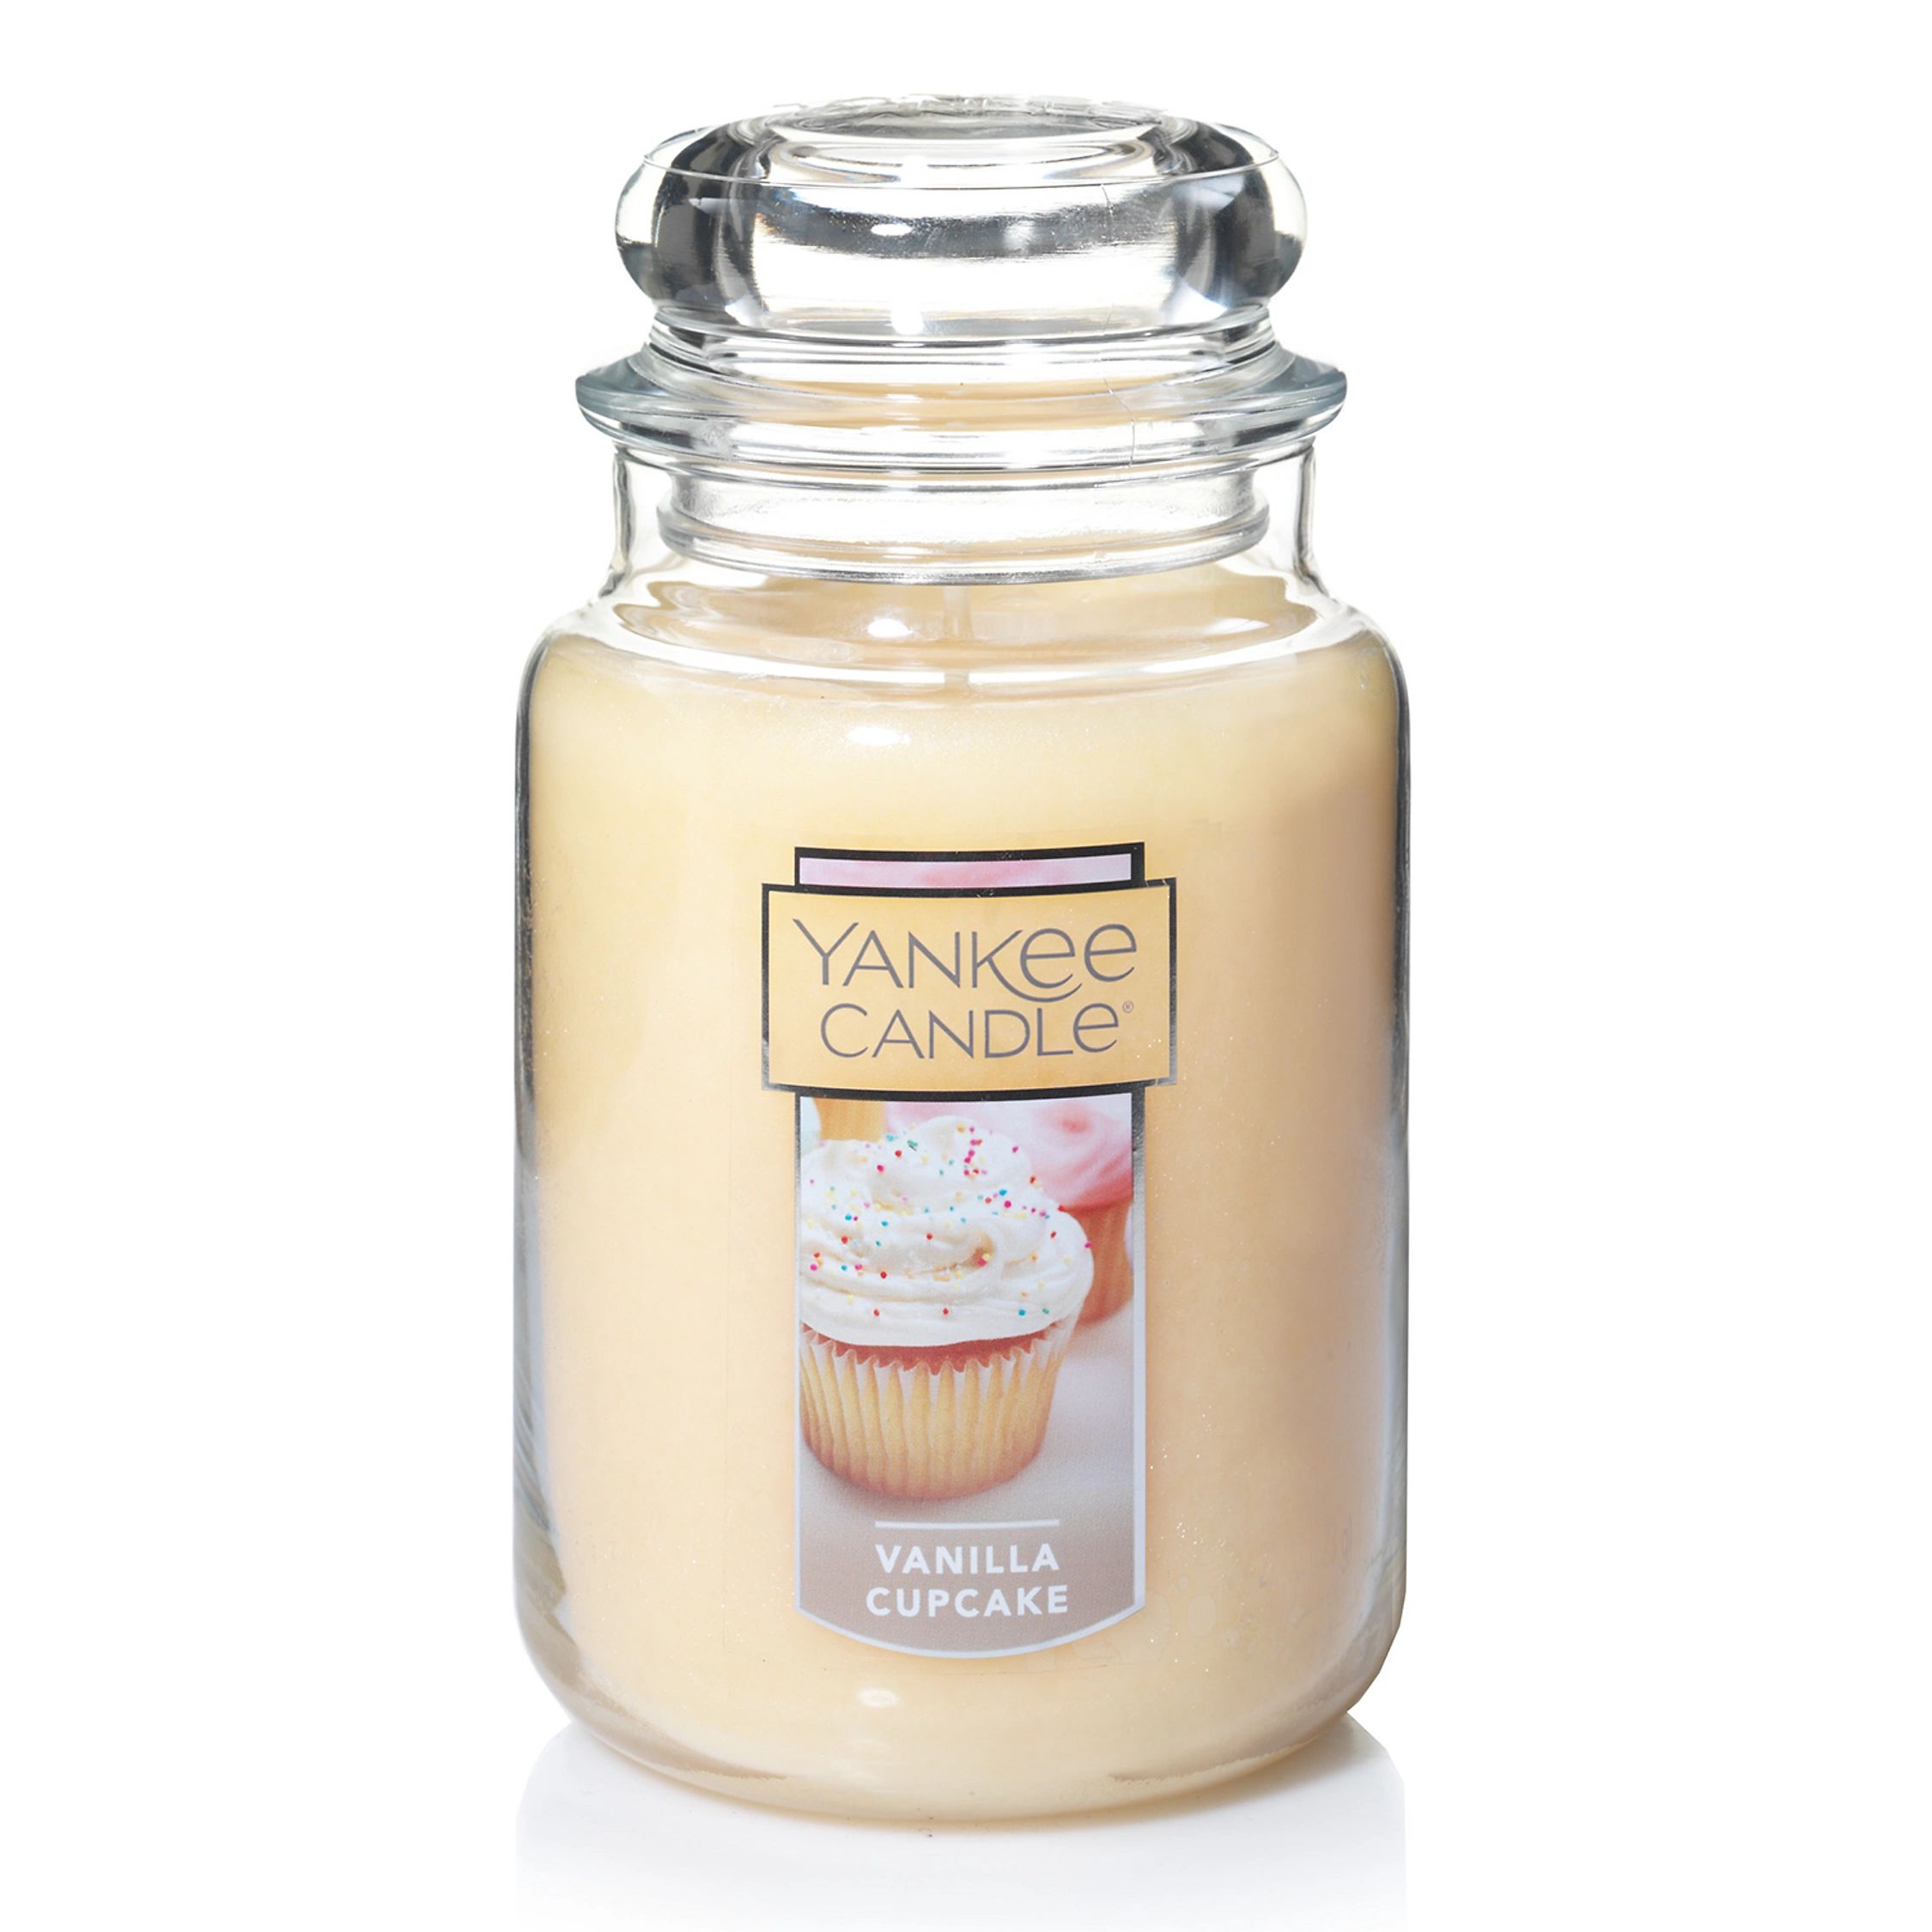 Yankee Candle Vanilla Cupcake 22-oz. Large Candle Jar | Kohl's